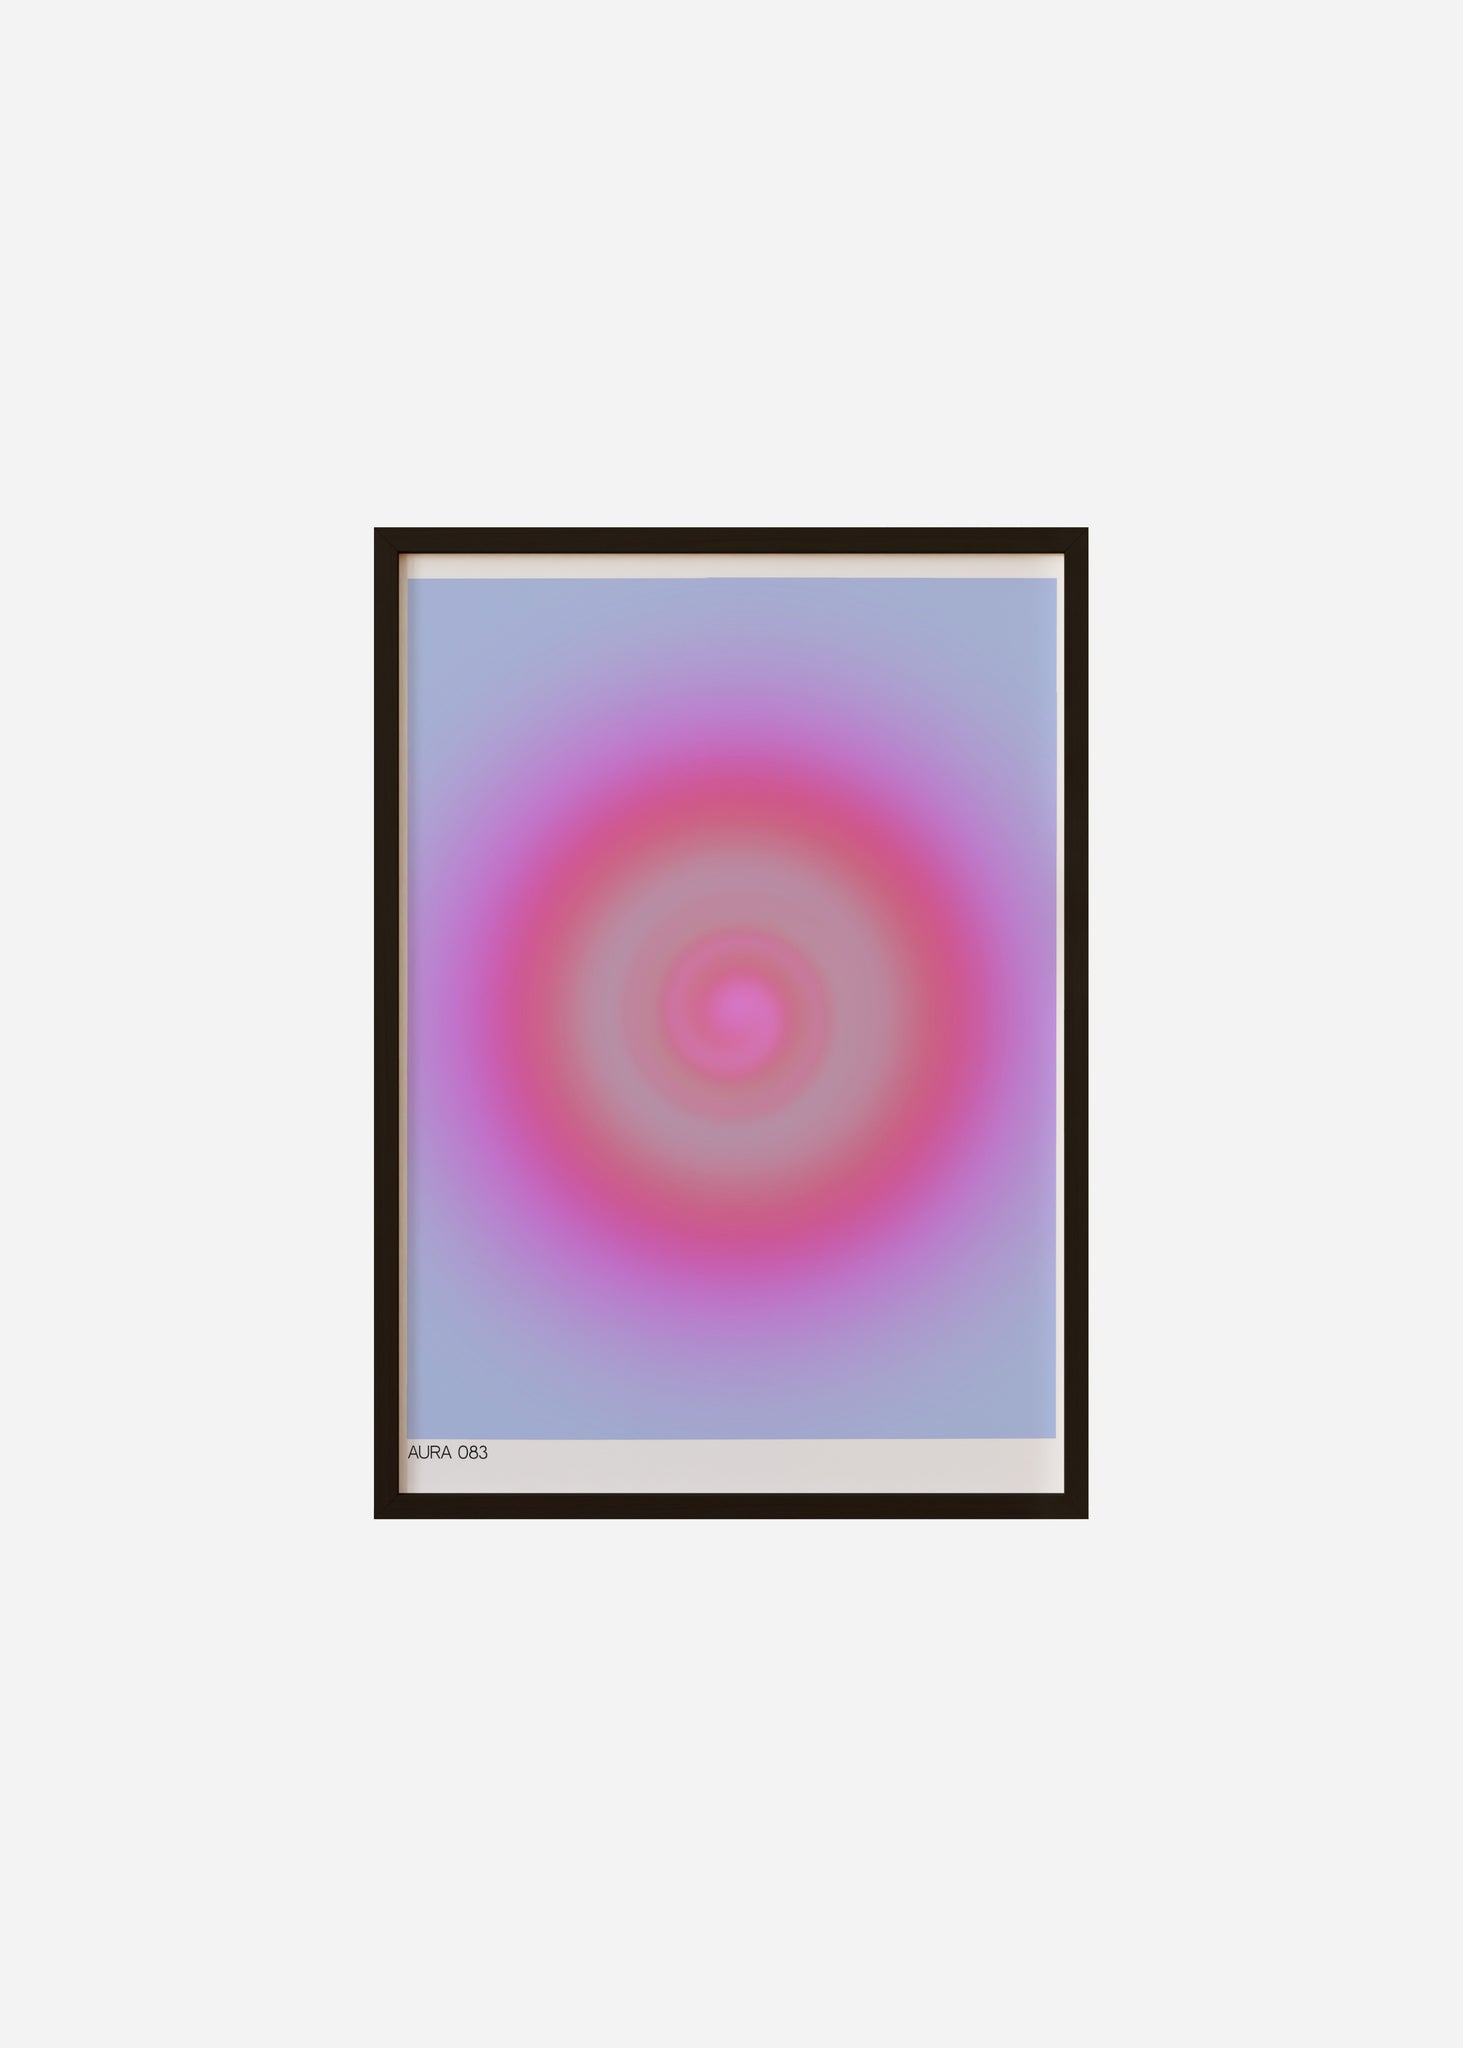 aura 083 Framed Print